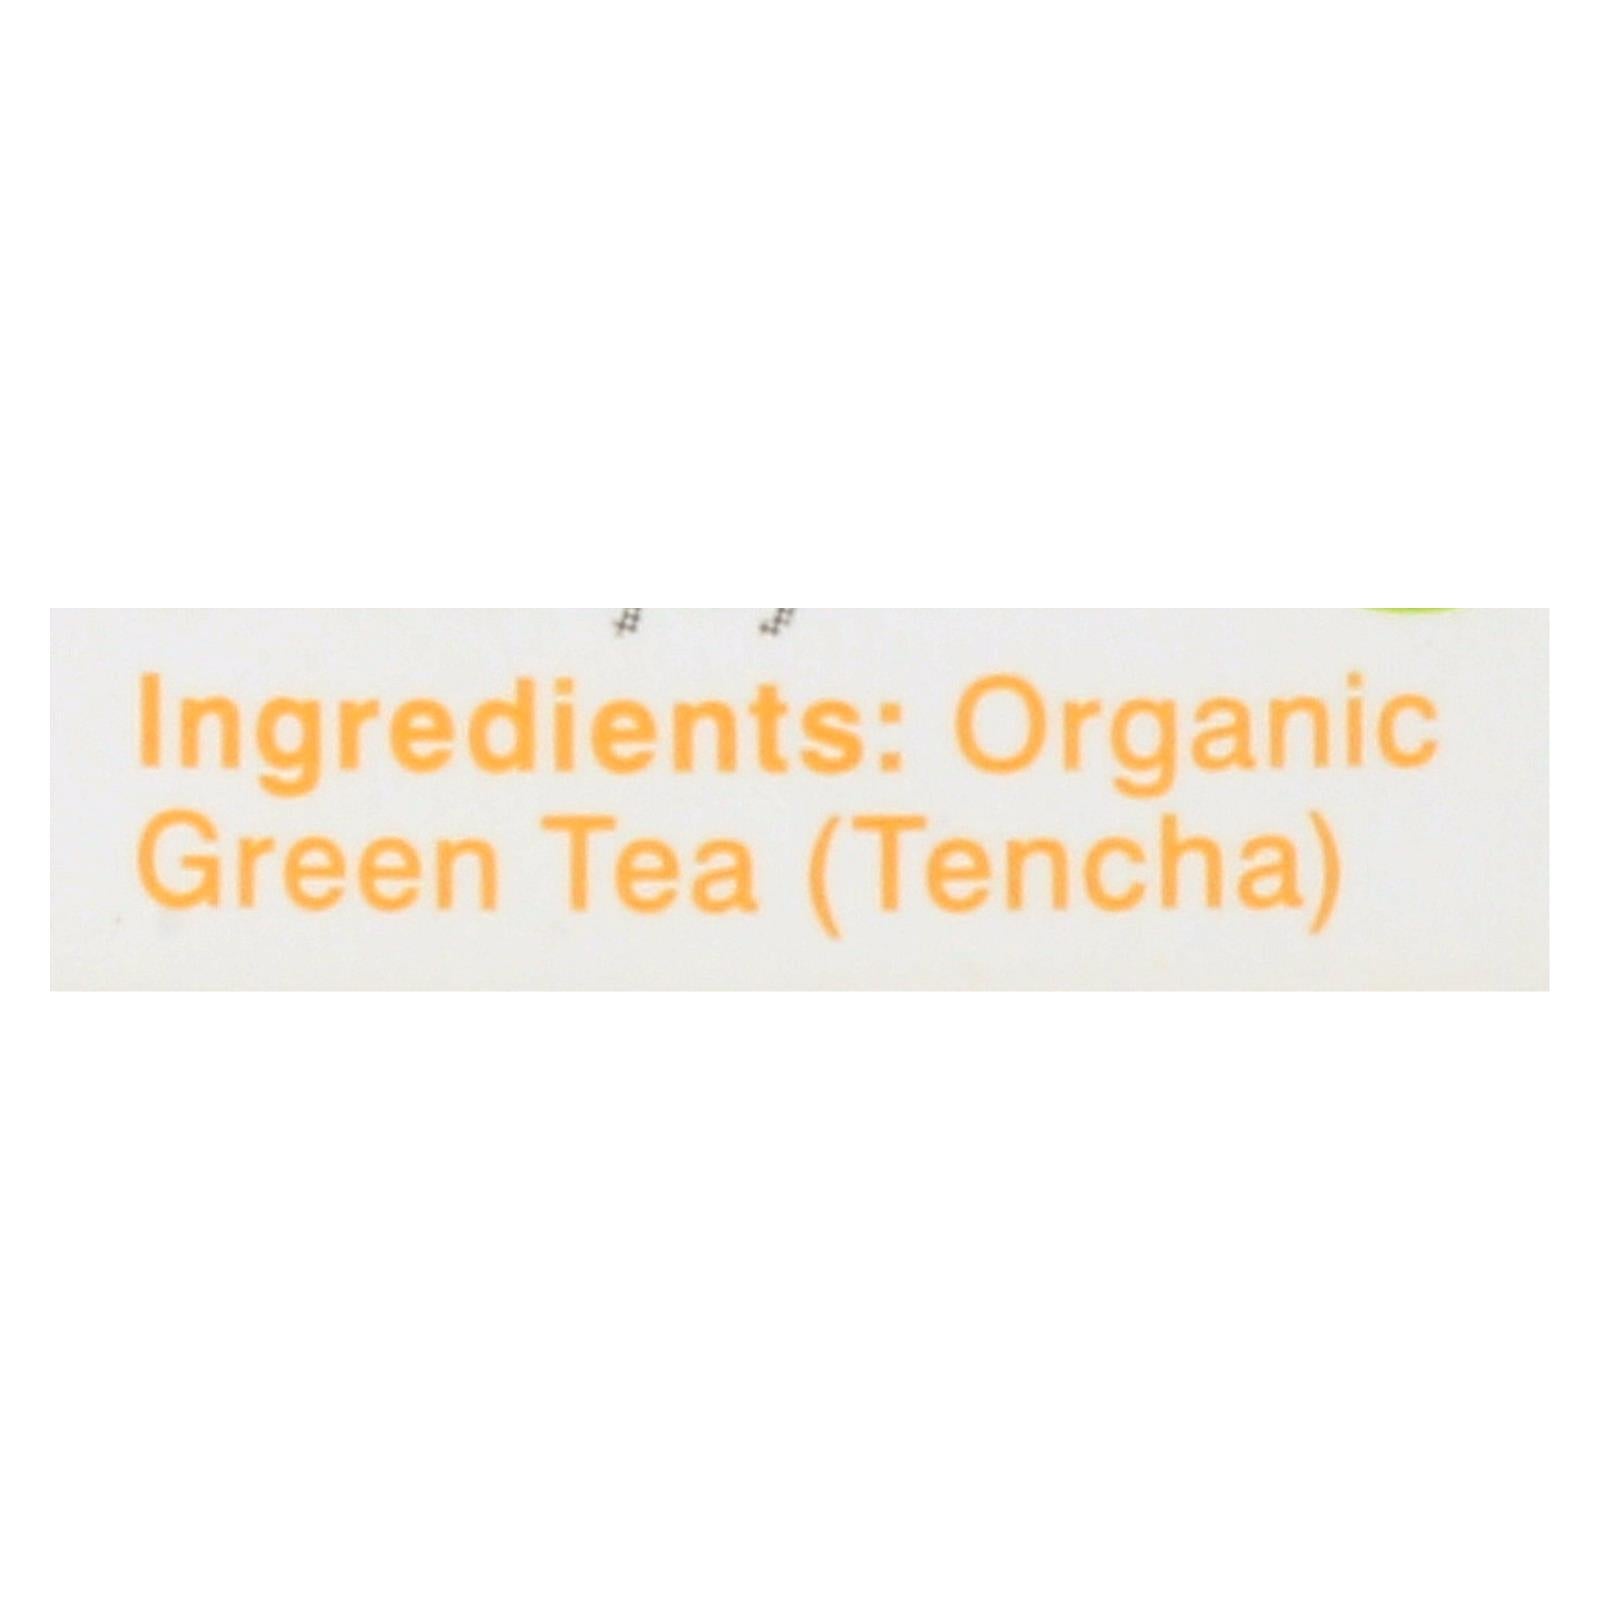 Matcha Love Green Tea Powder - Medium Bodied - Case of 10 - 0.7 oz.